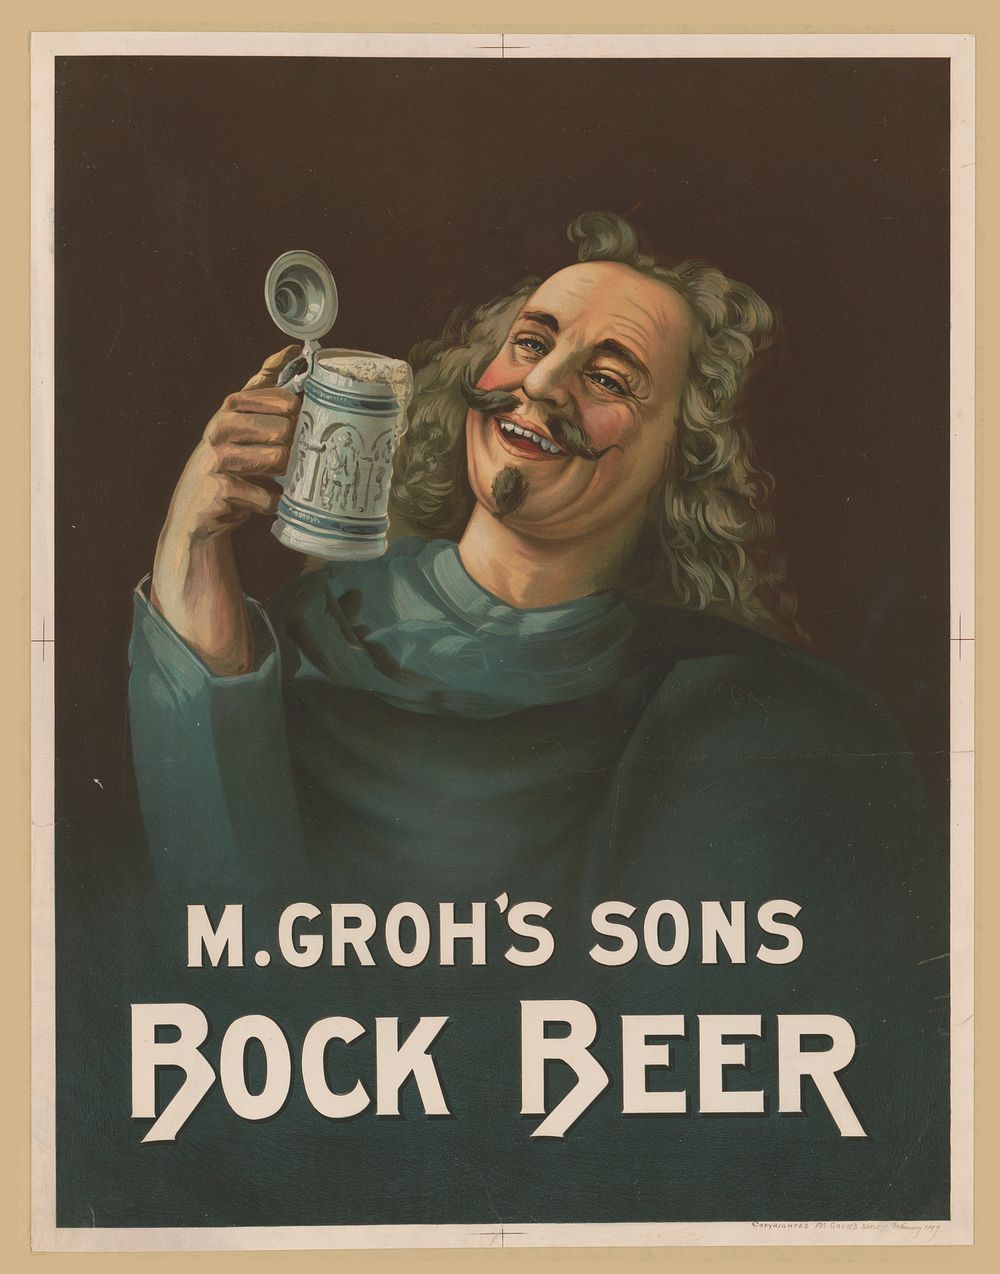 M. Groh's Sons, Bock Beer